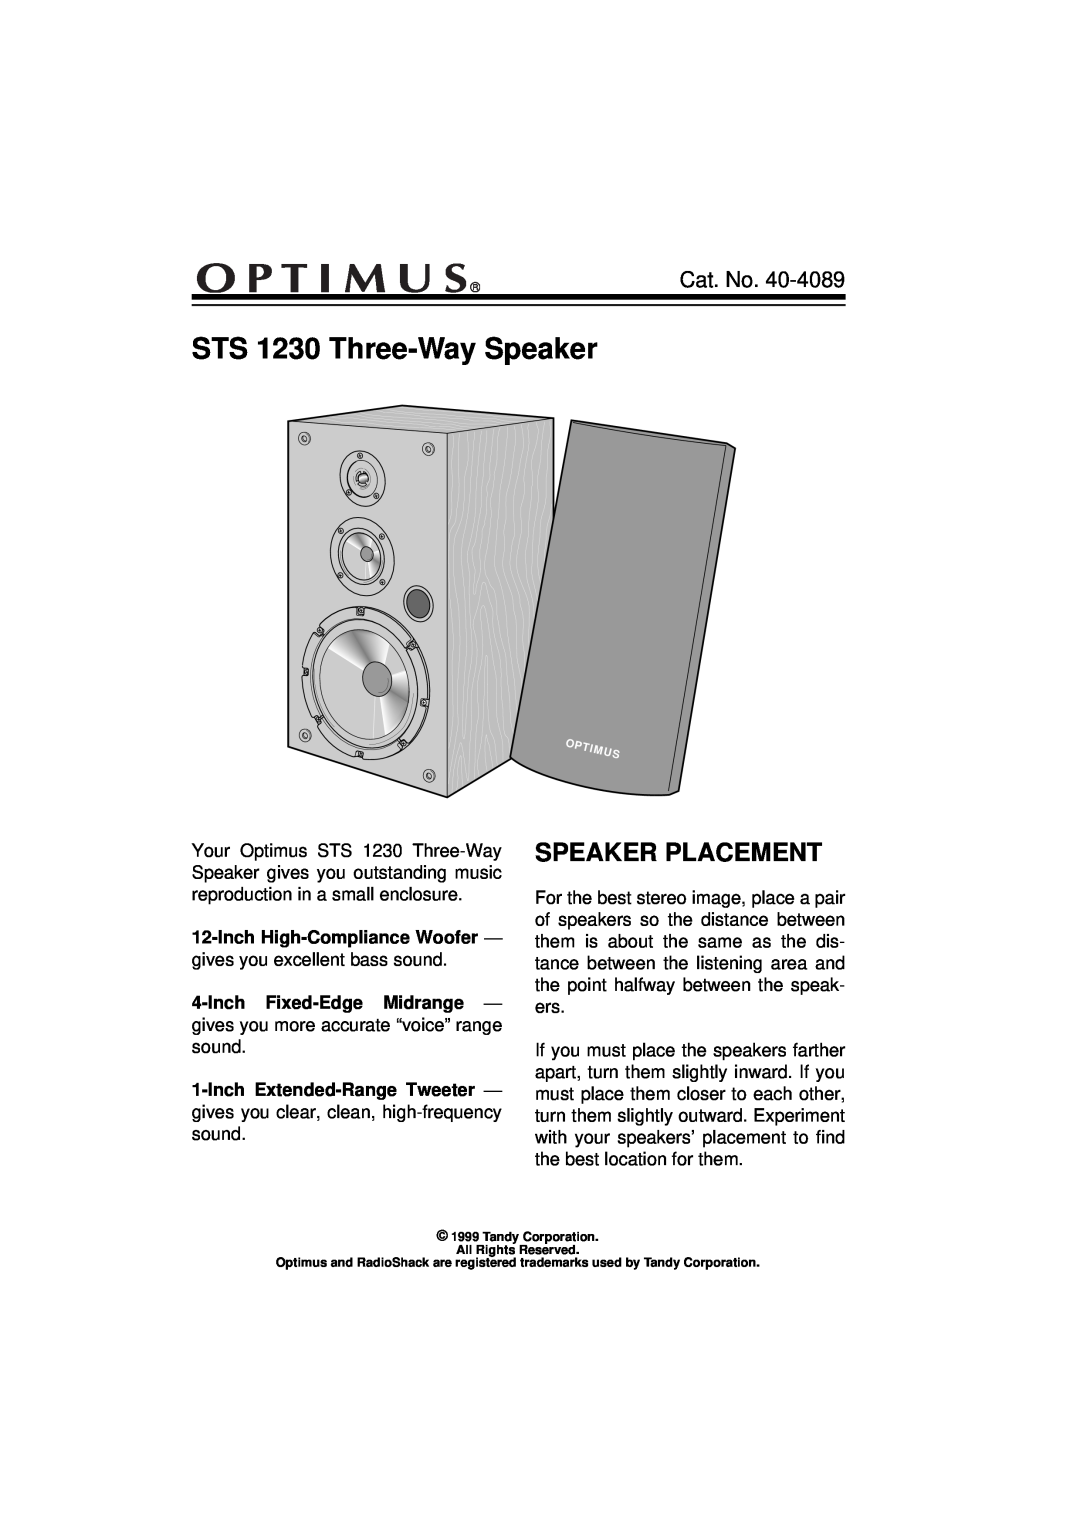 Optimus manual Speaker Placement, STS 1230 Three-WaySpeaker, Cat. No 